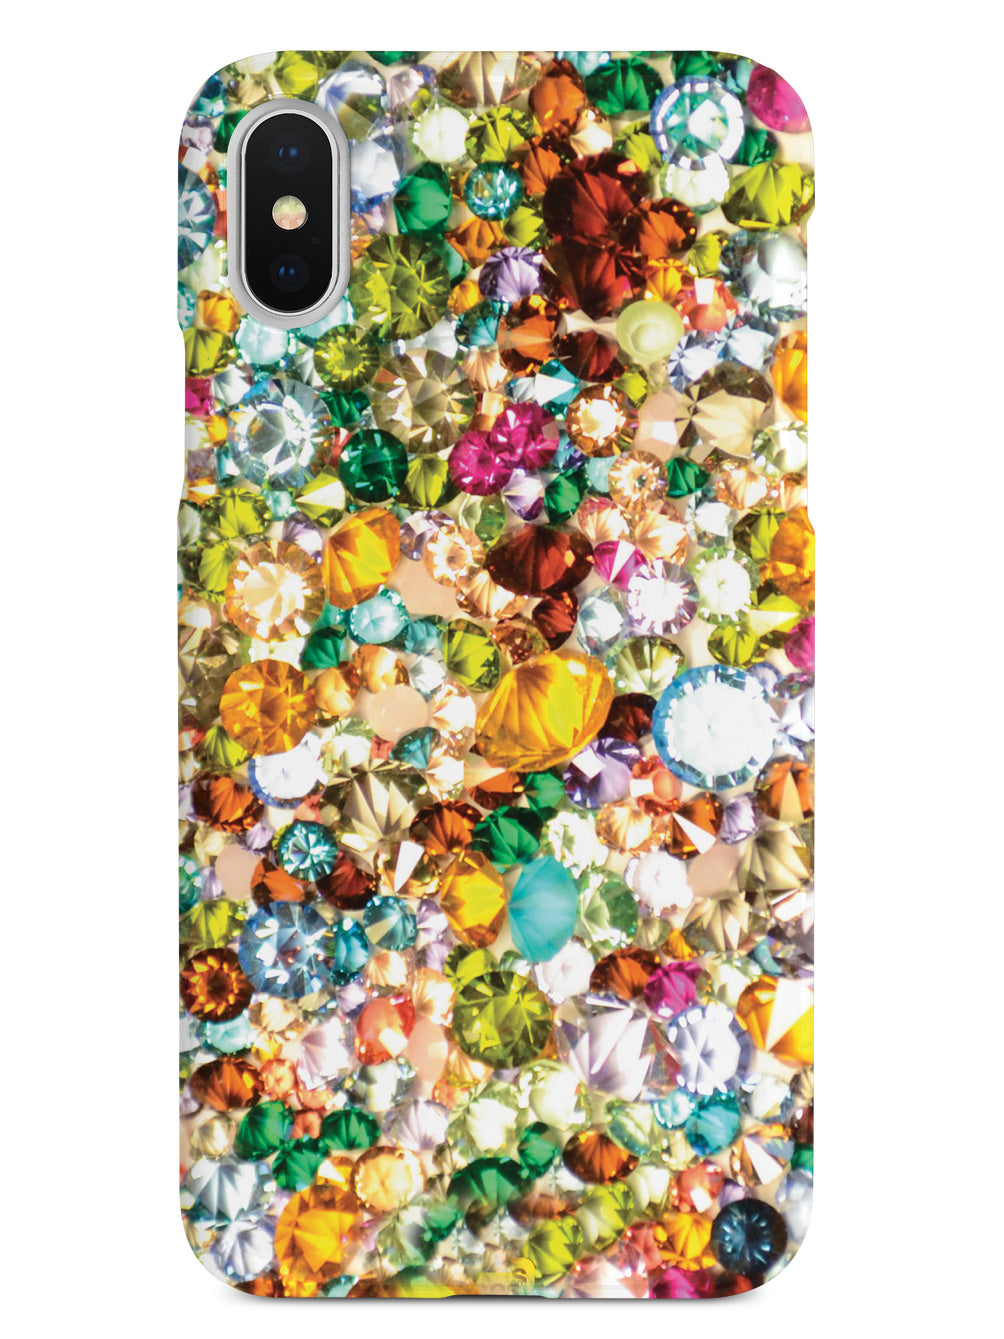 Colorful Bling - Shiny Case